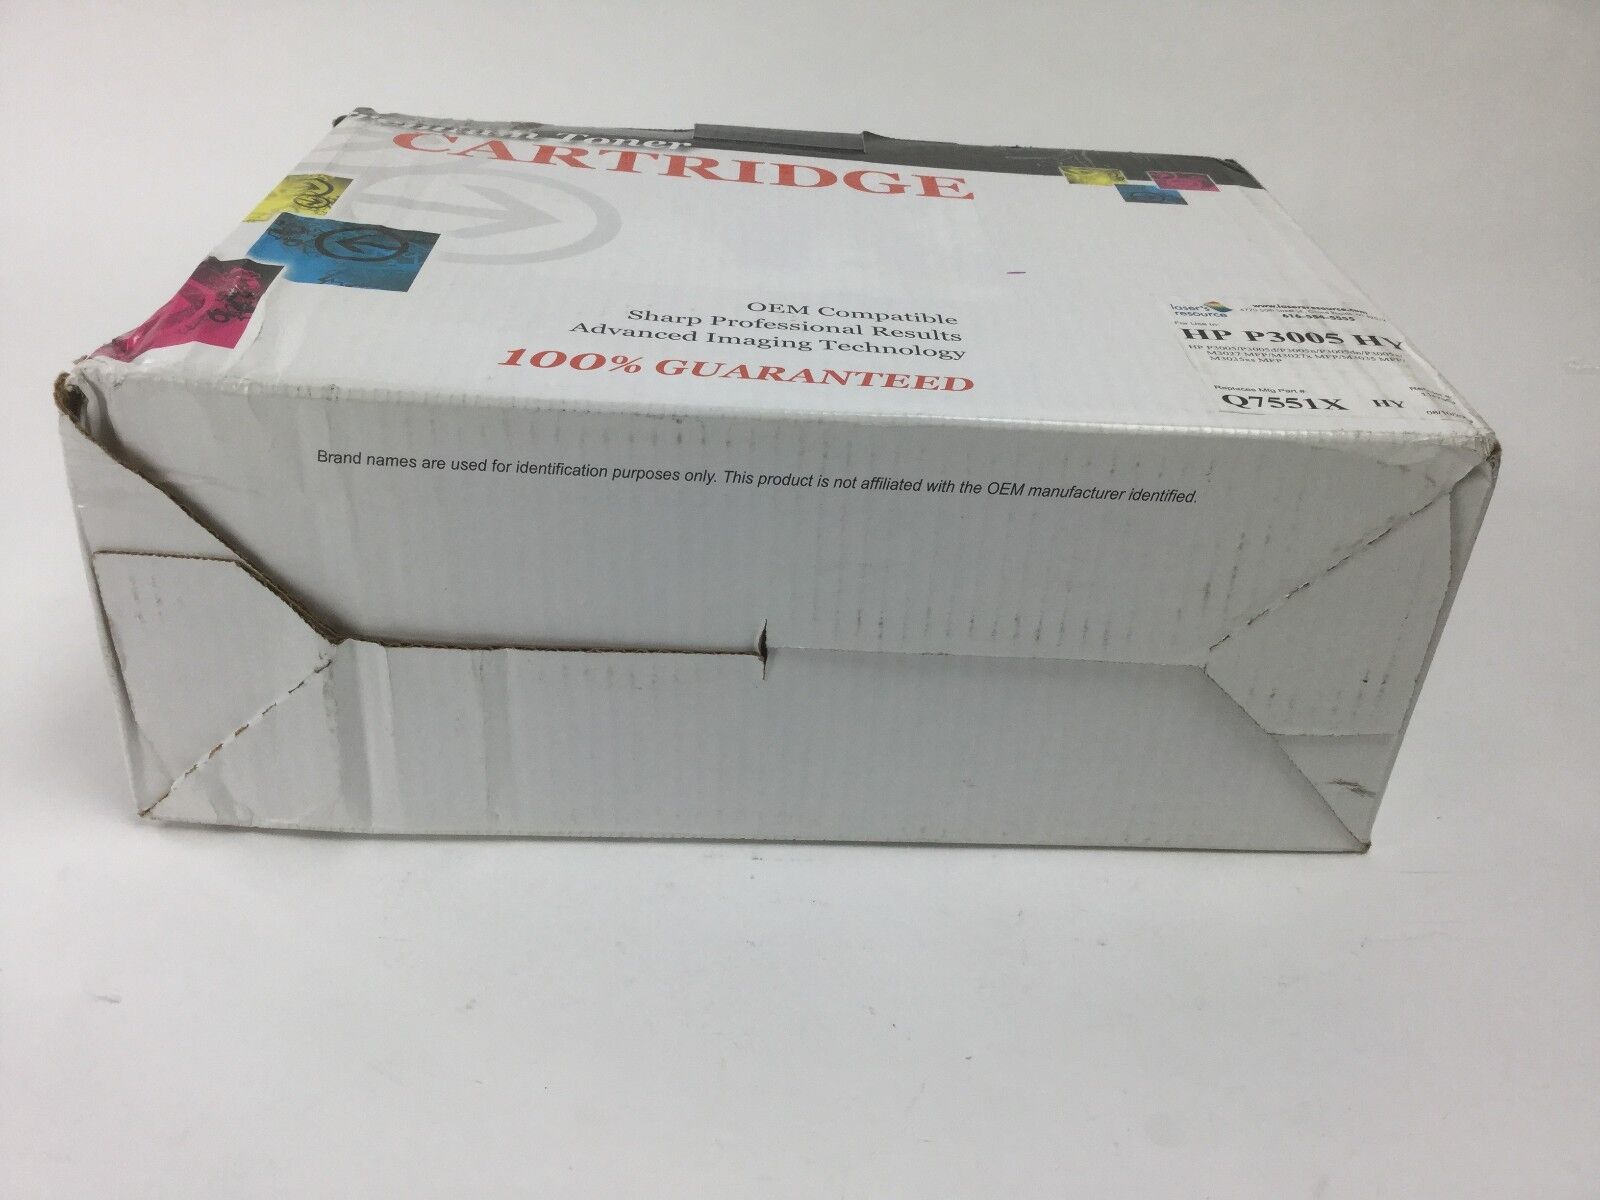 Premium Toner Cartridge for HP Q7551X, NEW Factory Sealed